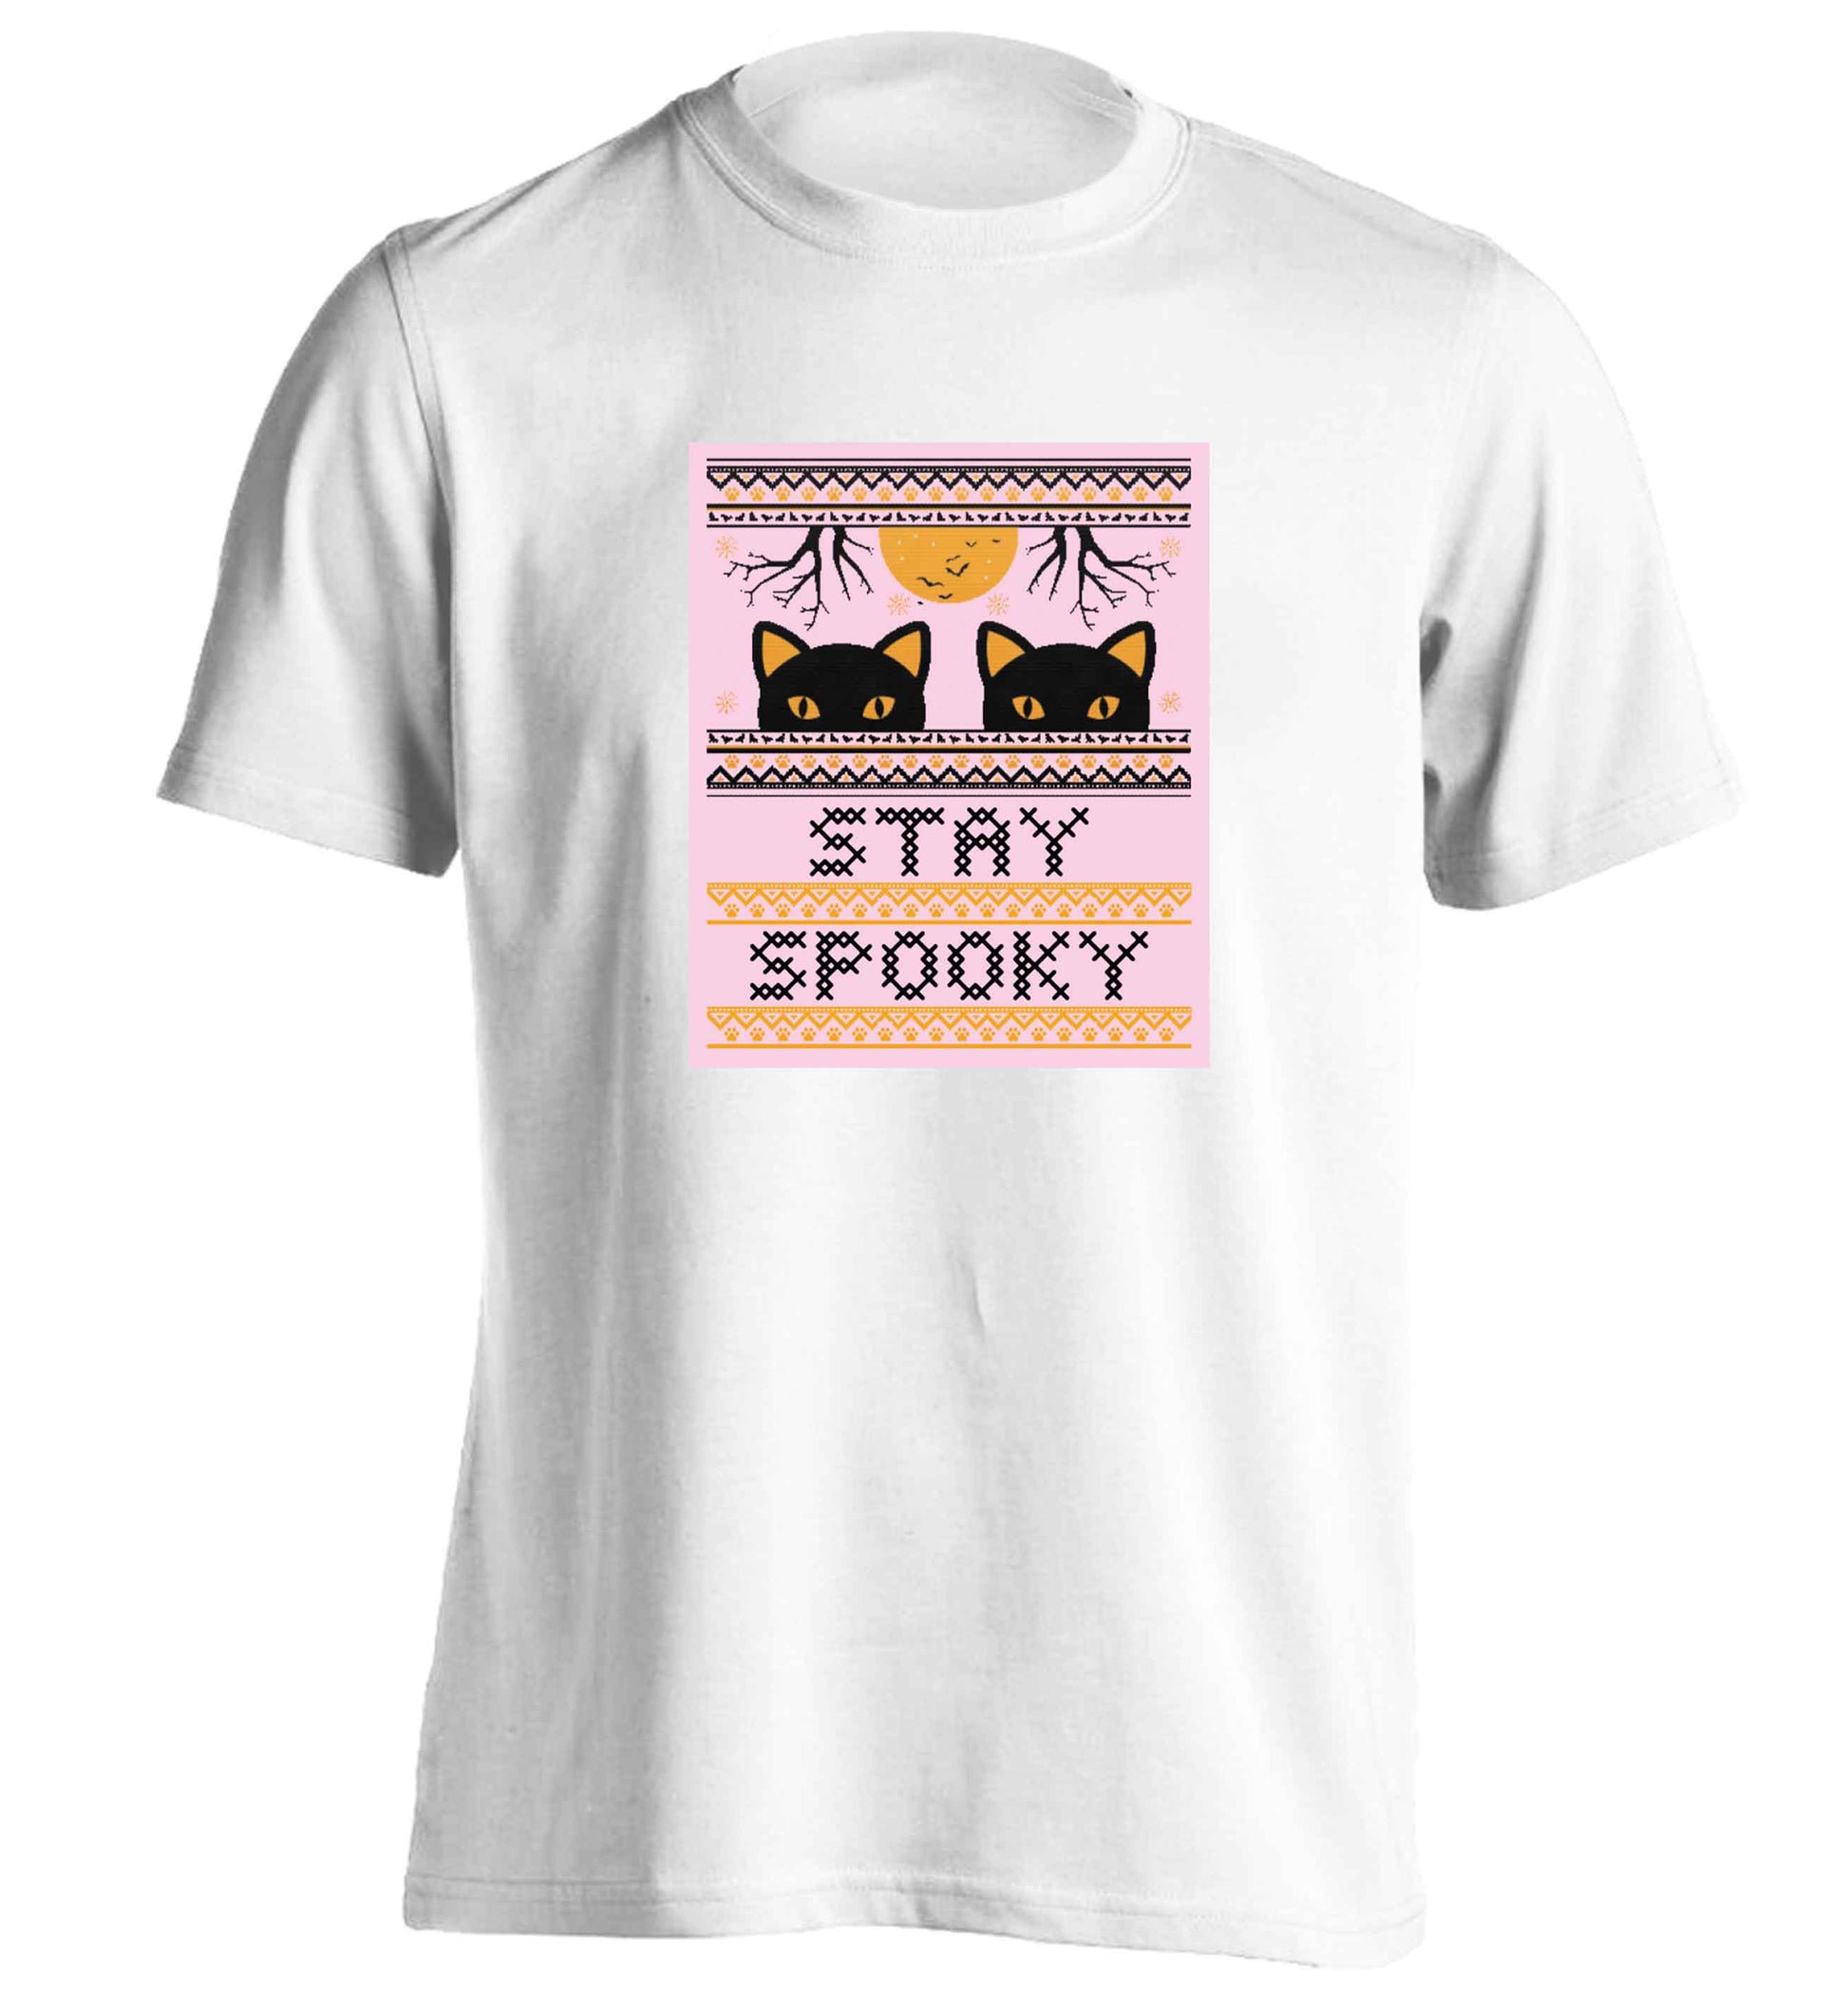 Stay spooky adults unisex white Tshirt 2XL